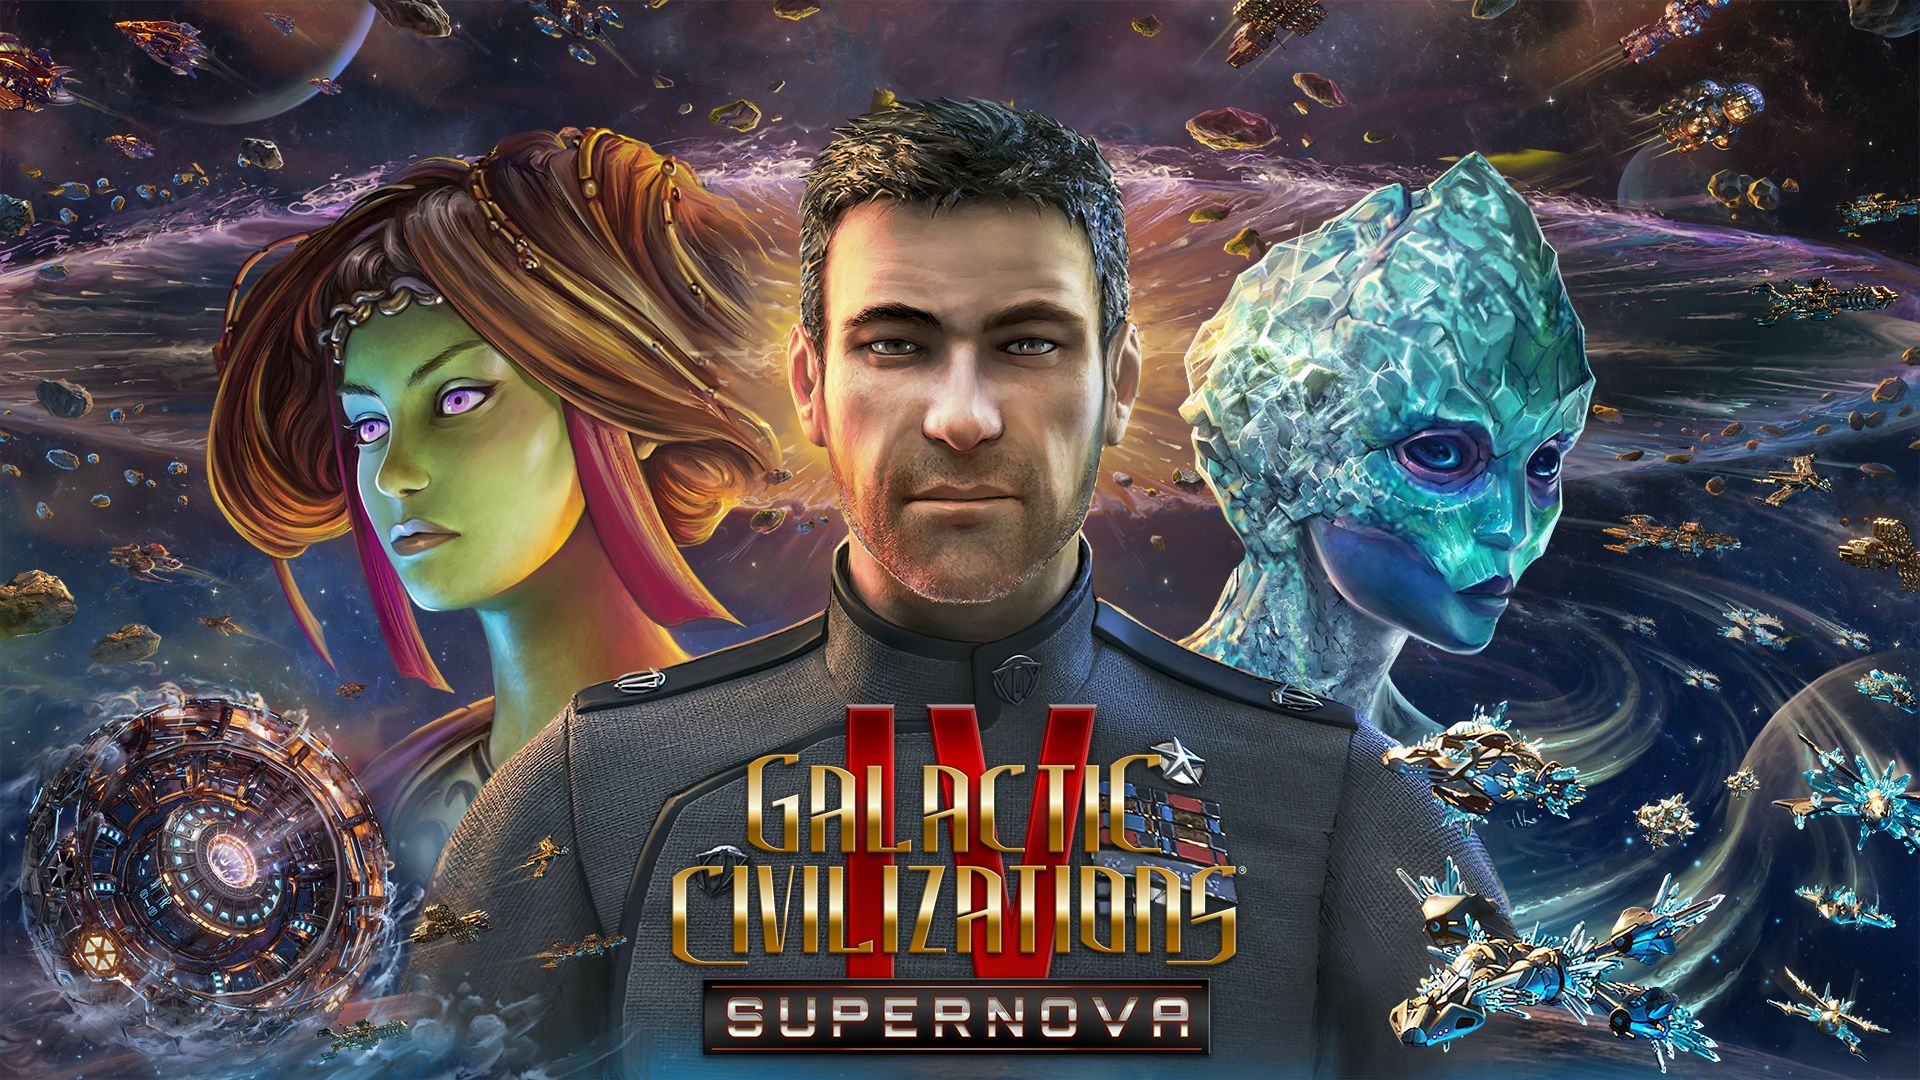 Video: Galactic Civilizations IV: Supernova gameplay trailer